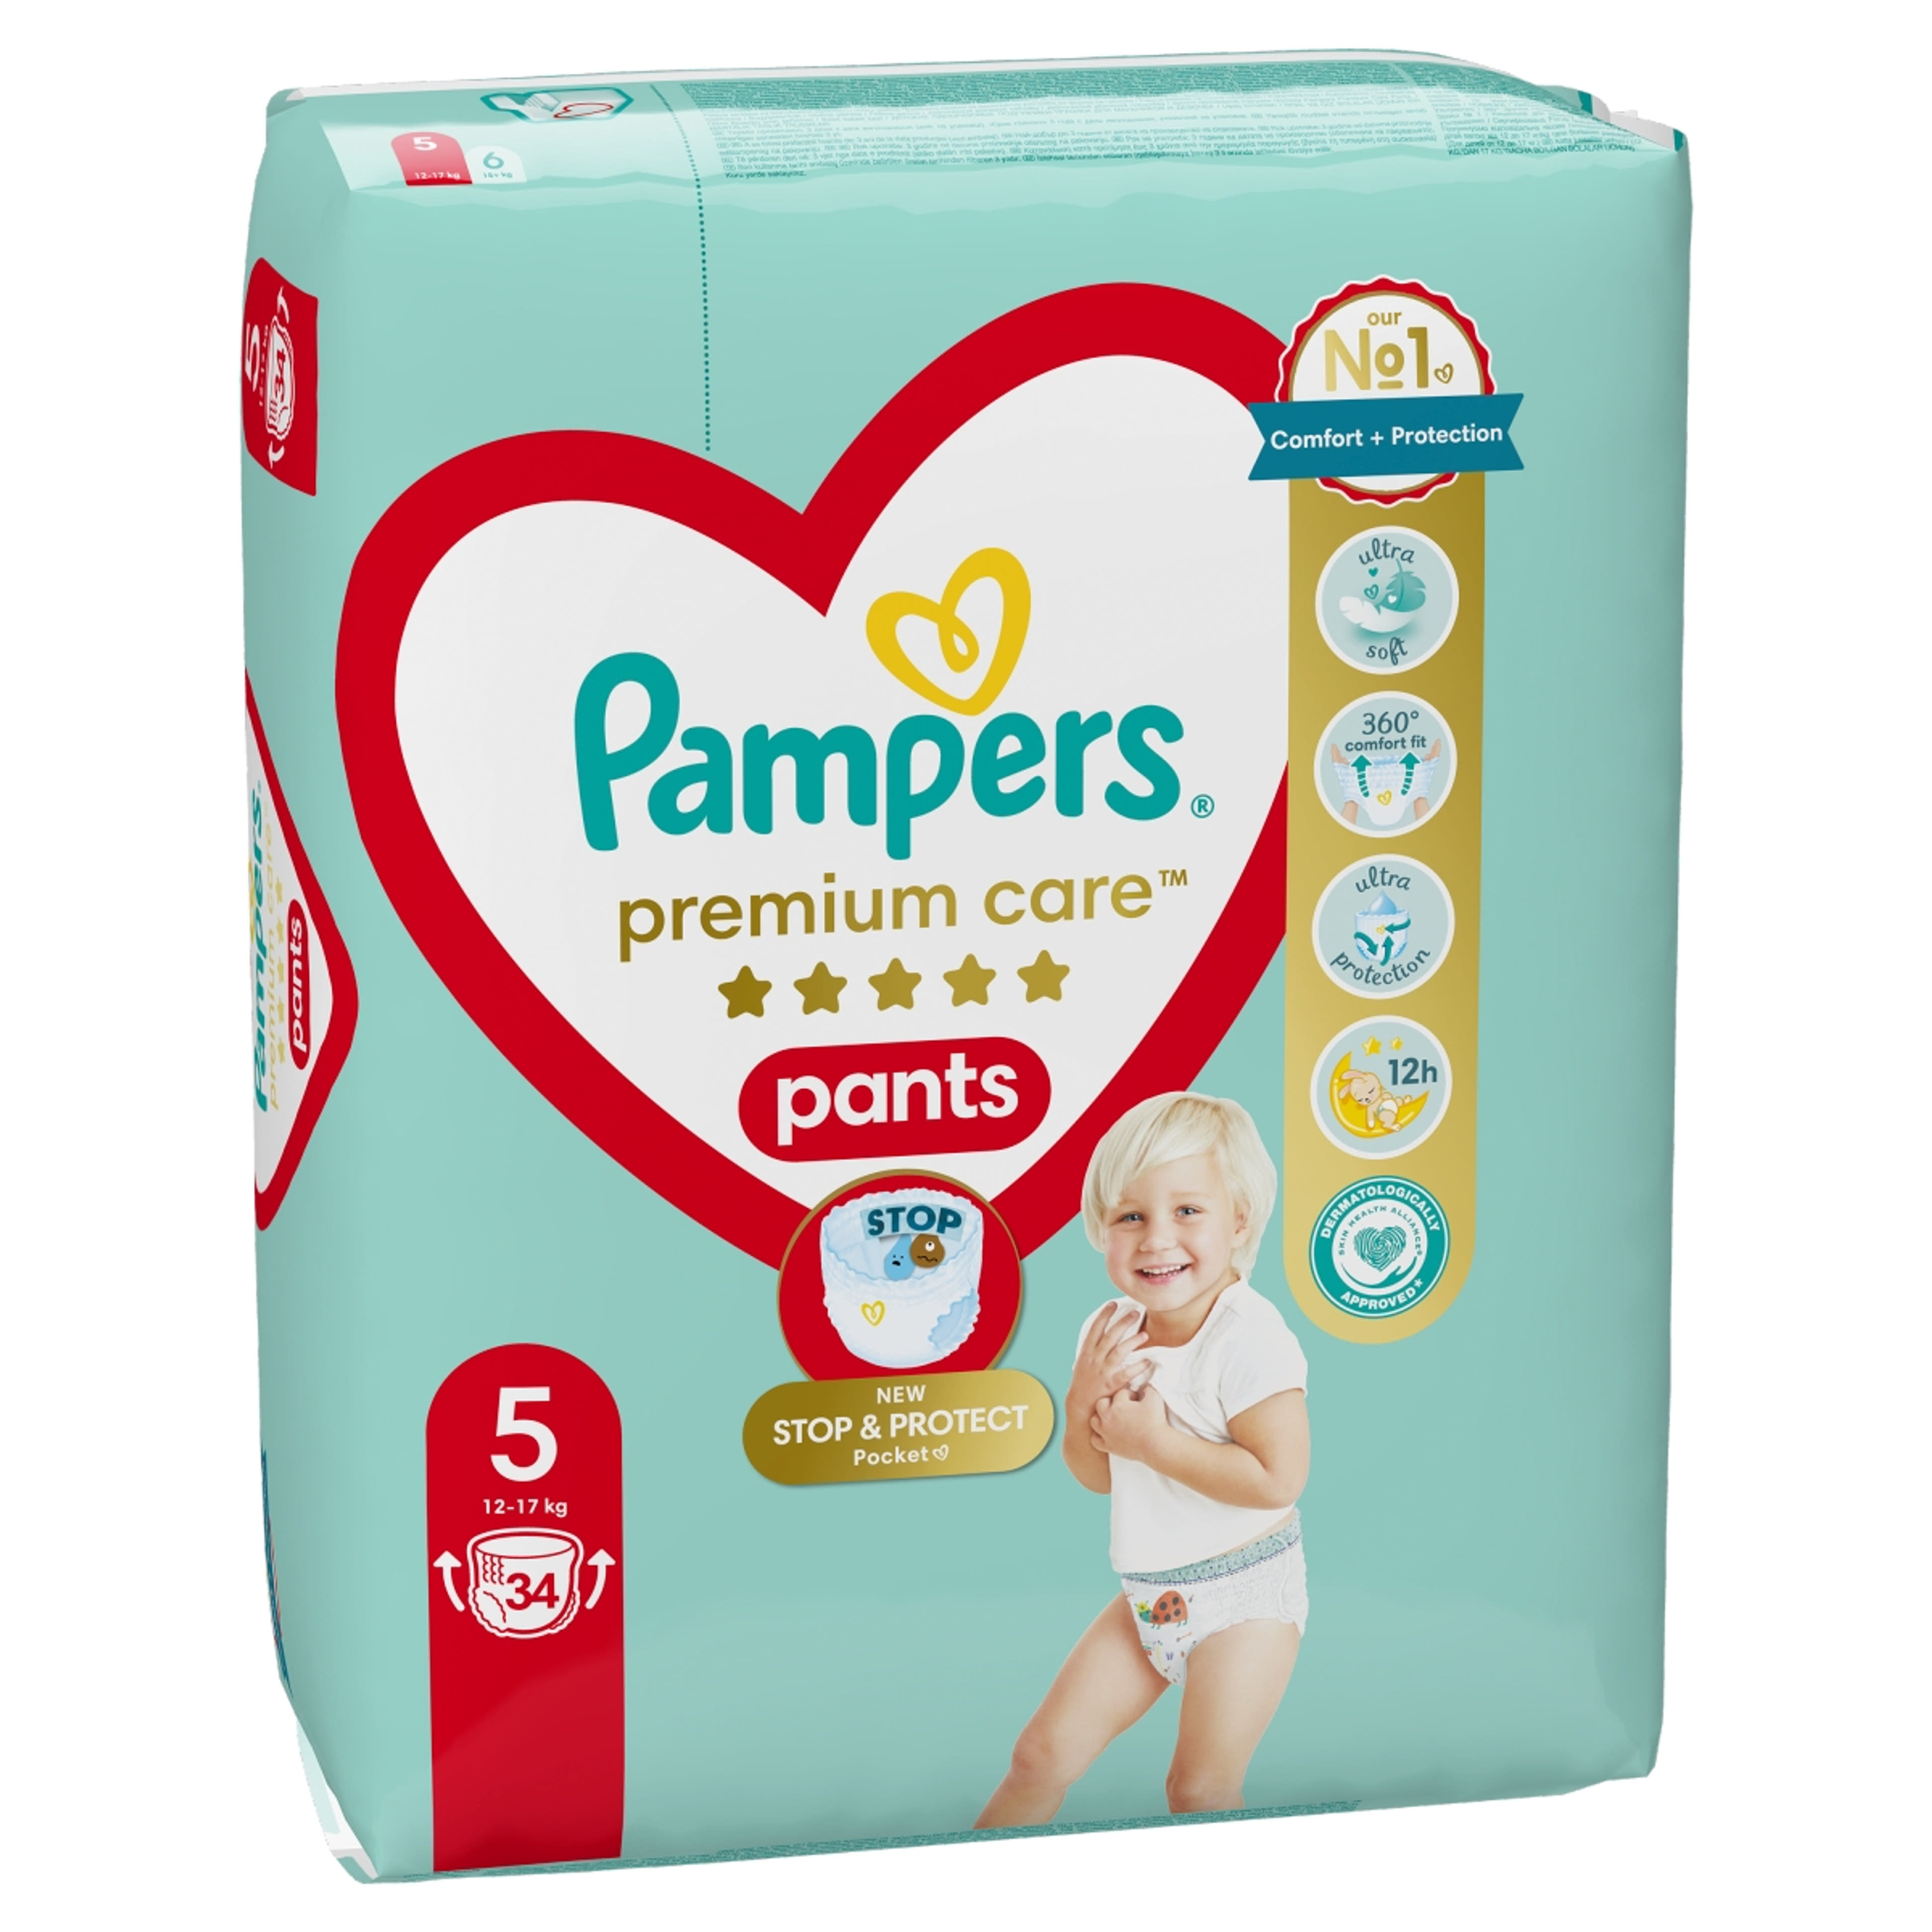 Pampers Premium Care Pants 5-ös 12-17kg - 34 db-1